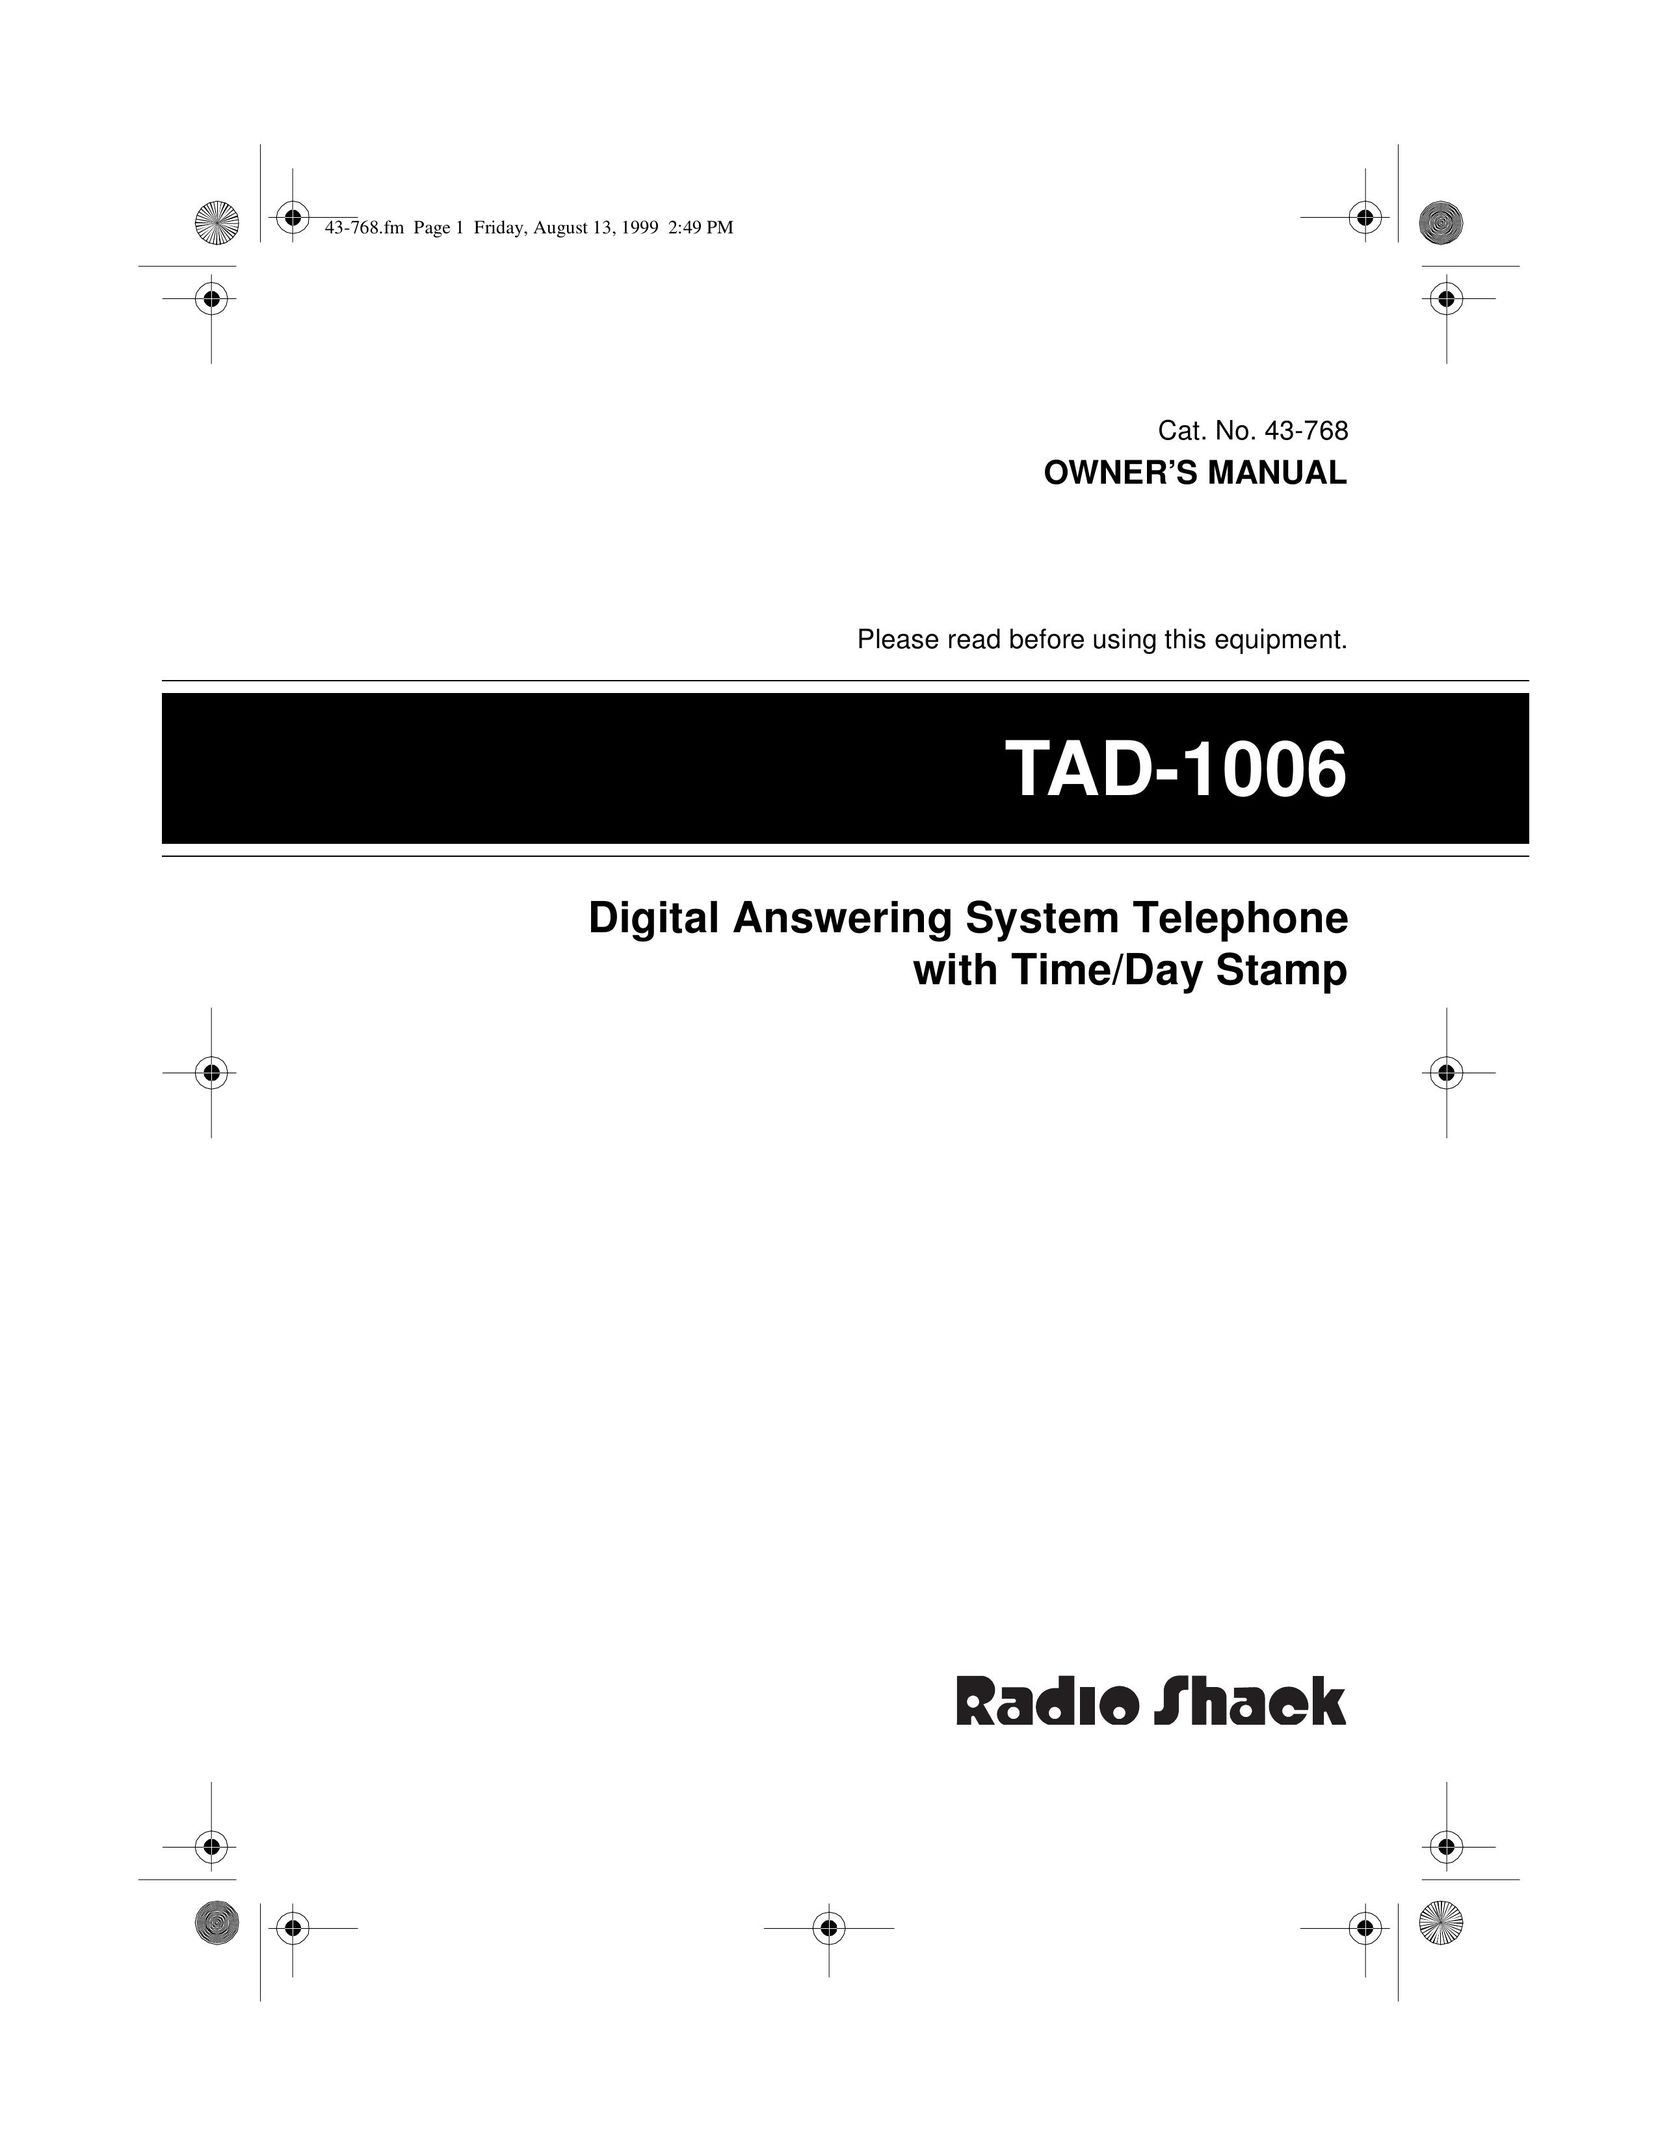 Radio Shack TAD-1006 Answering Machine User Manual